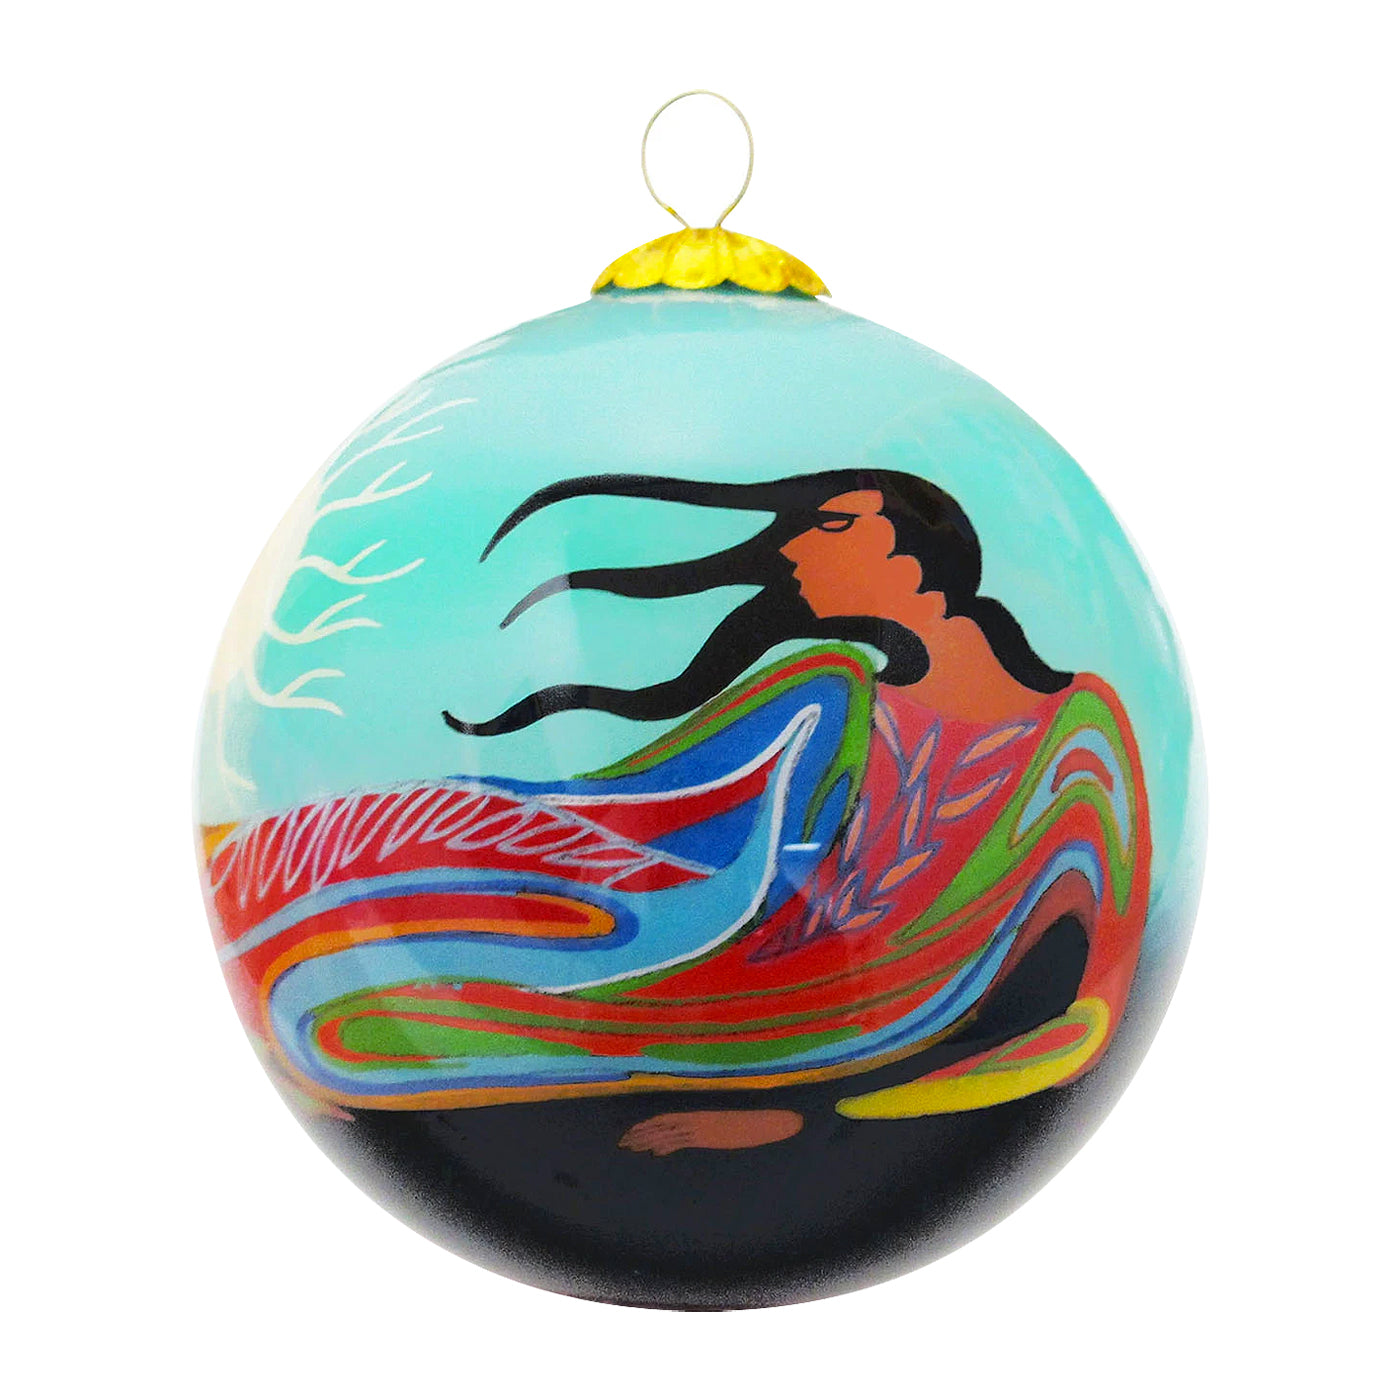 Native American Art Glass Ornament